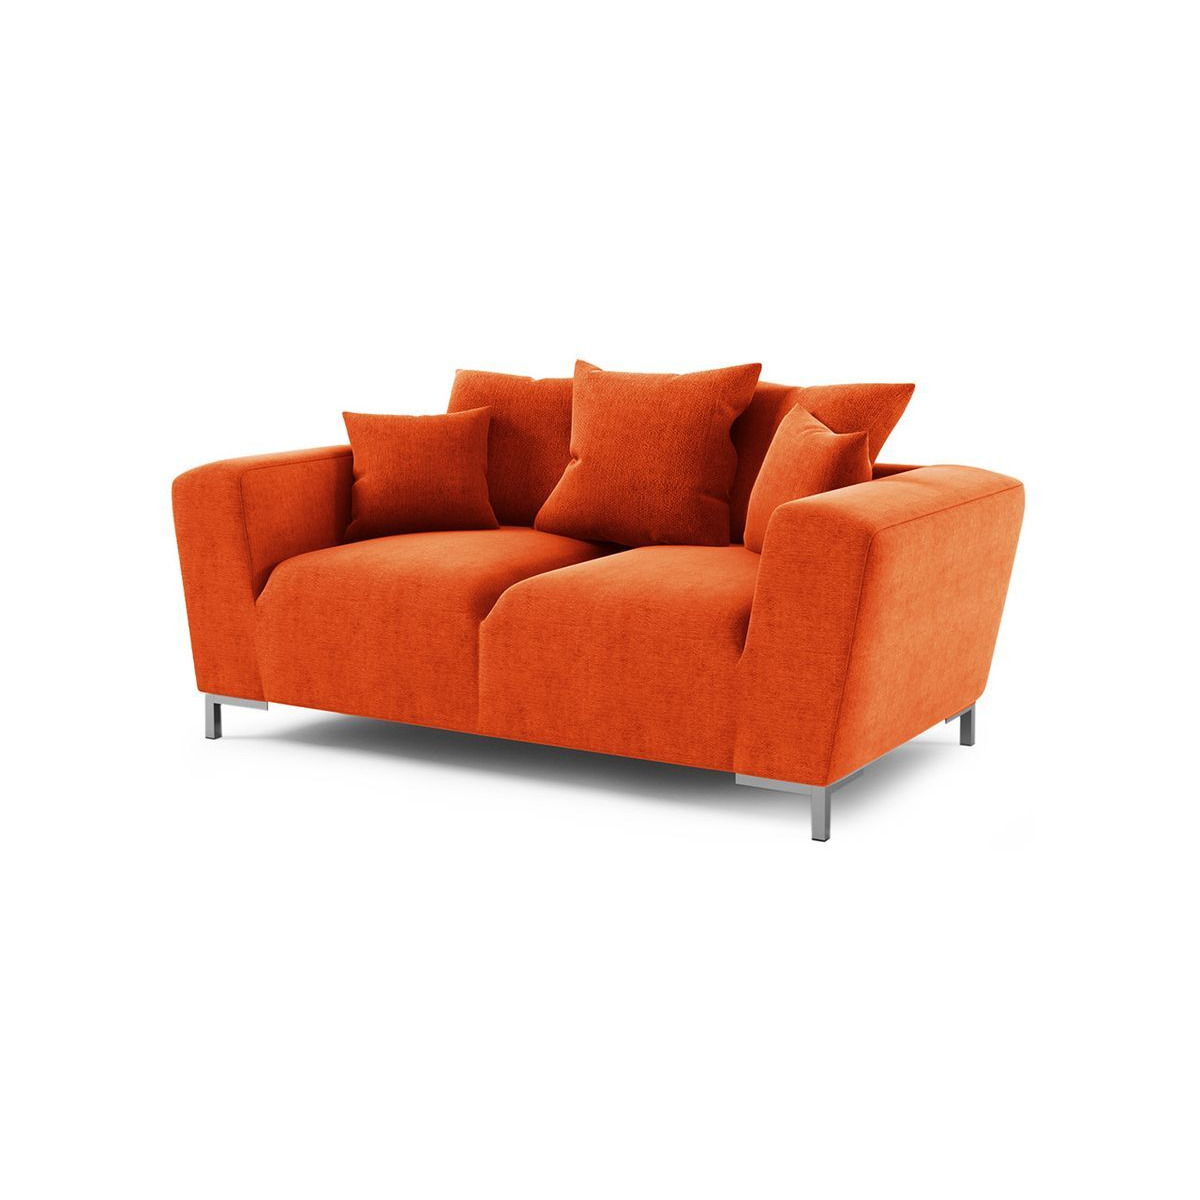 Stone 2 Seater Sofa, orange - image 1